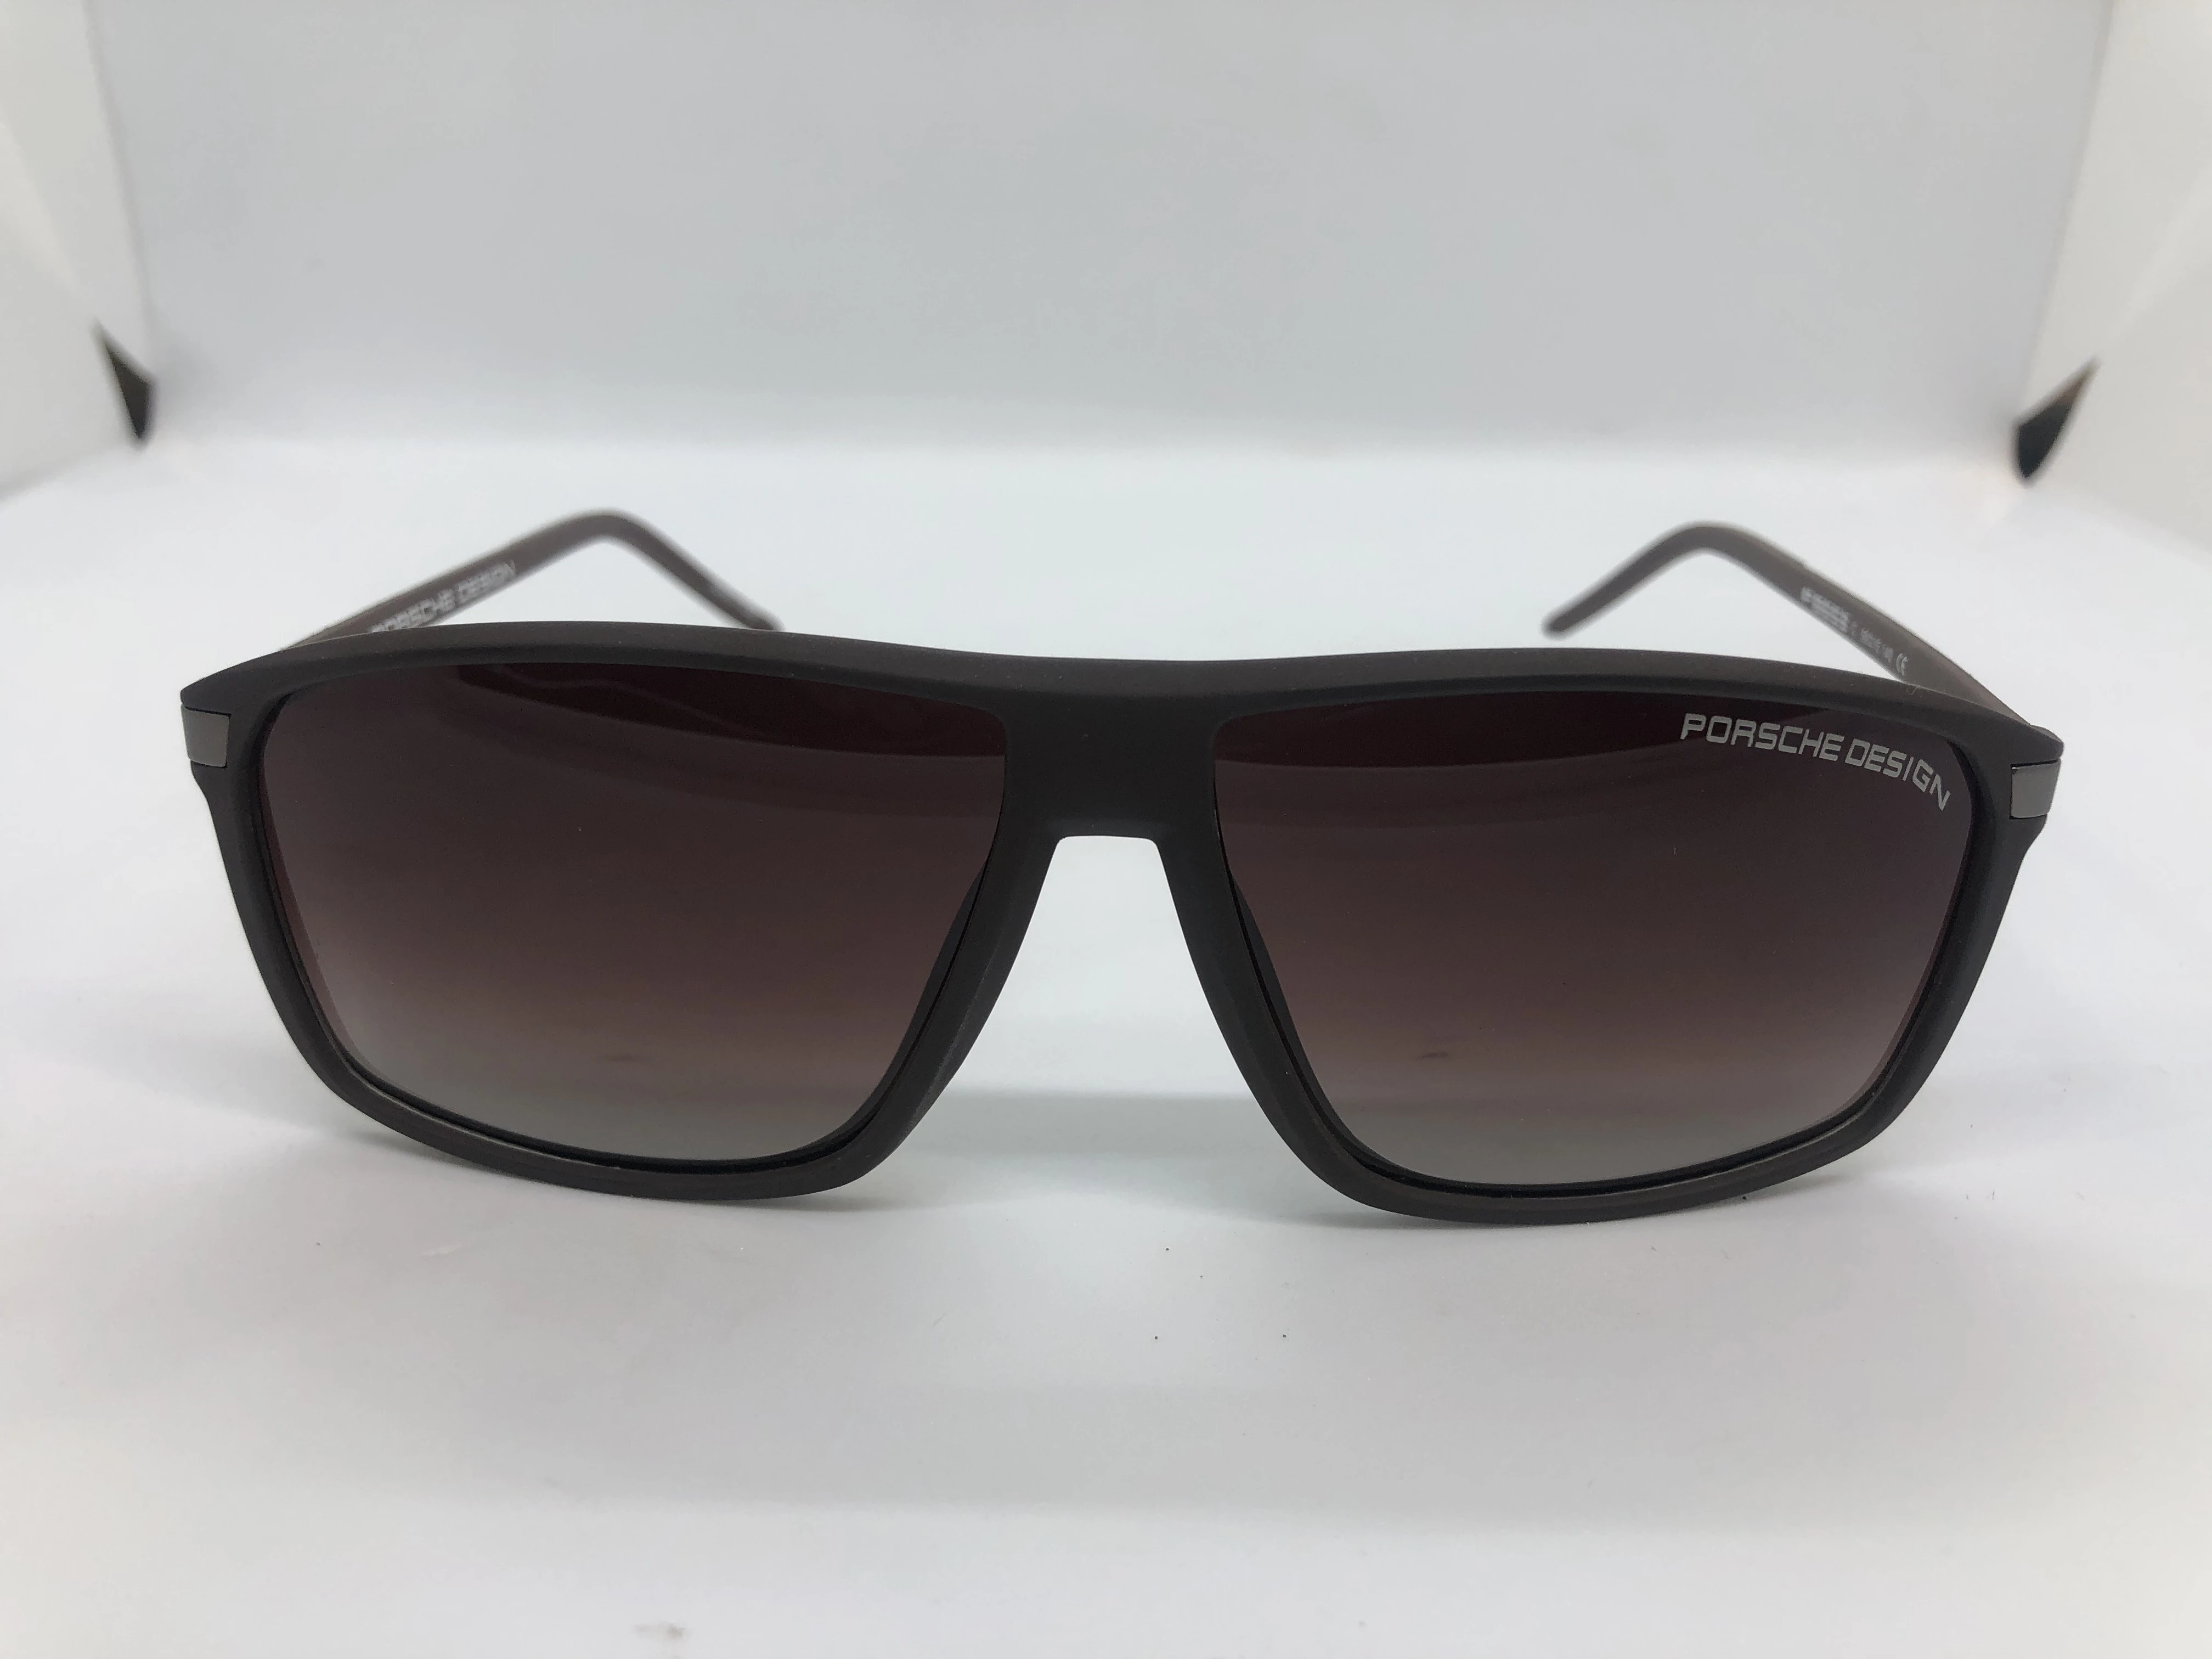 Sunglasses - Porsche Design - With Dark Brown Polycarbonate Frame - Hazel Lenses - And Dark Brown Agriculture - For Men